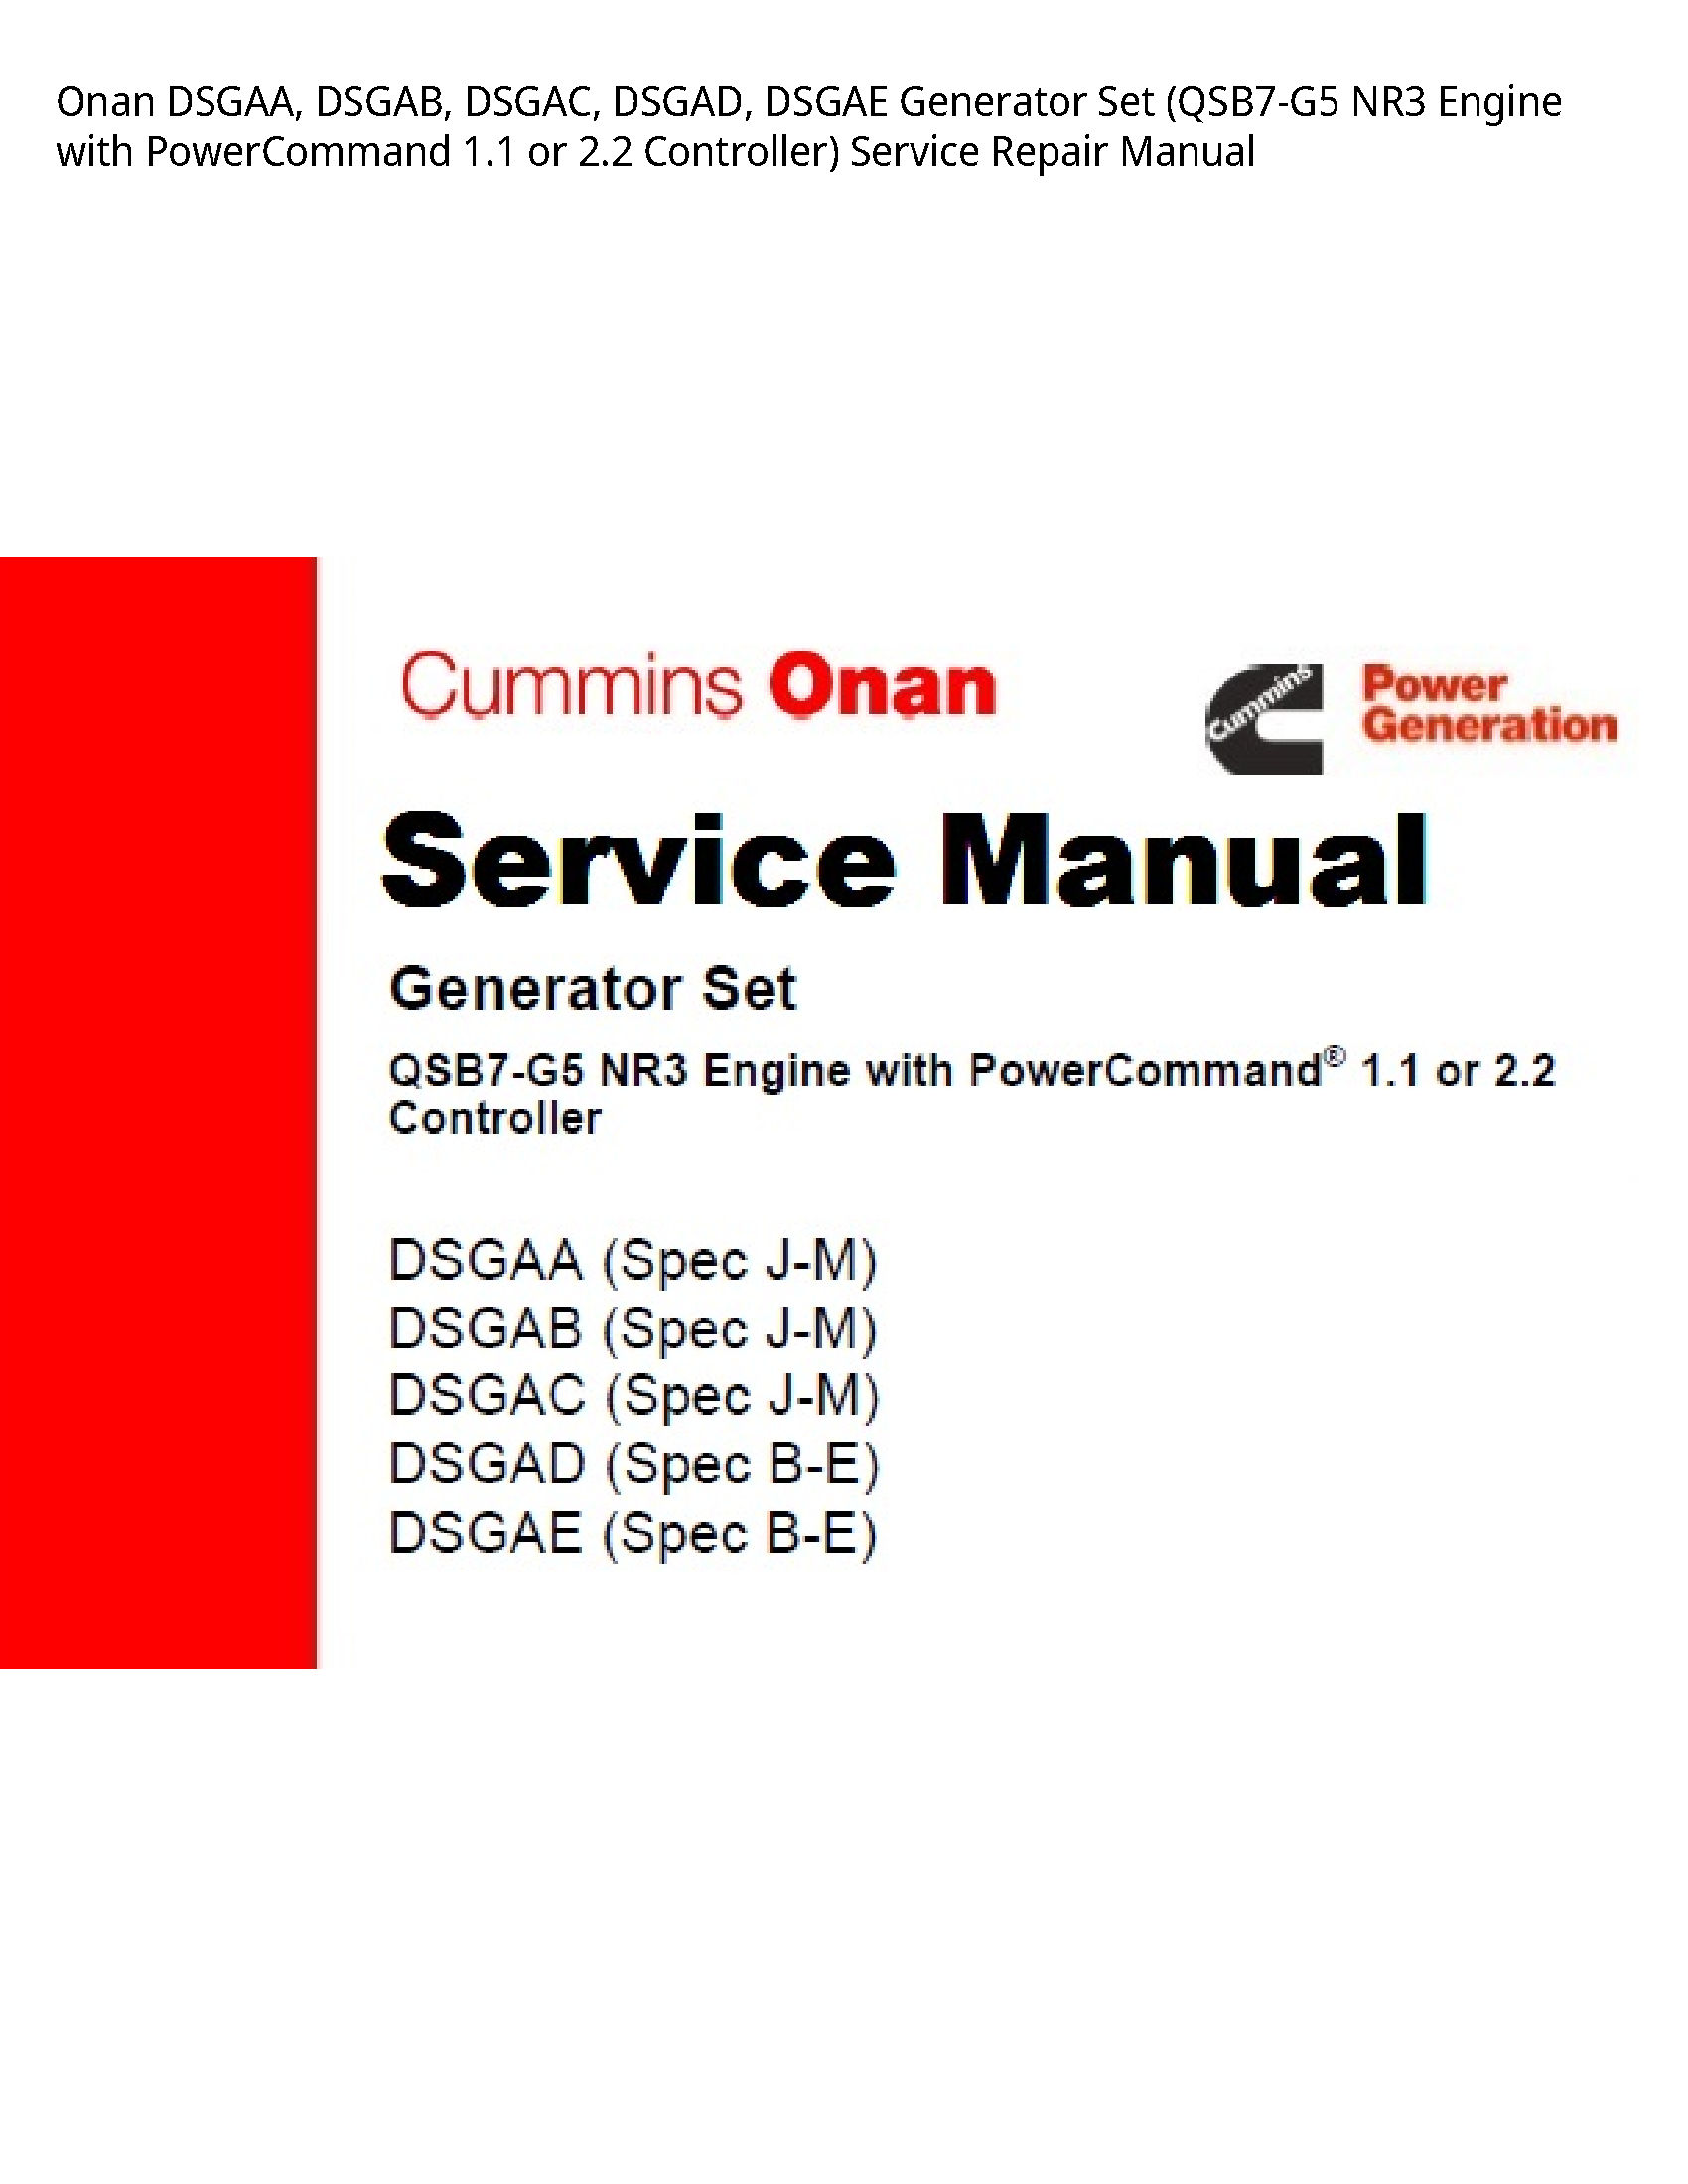 Onan (QSB7-G5 DSGAA manual